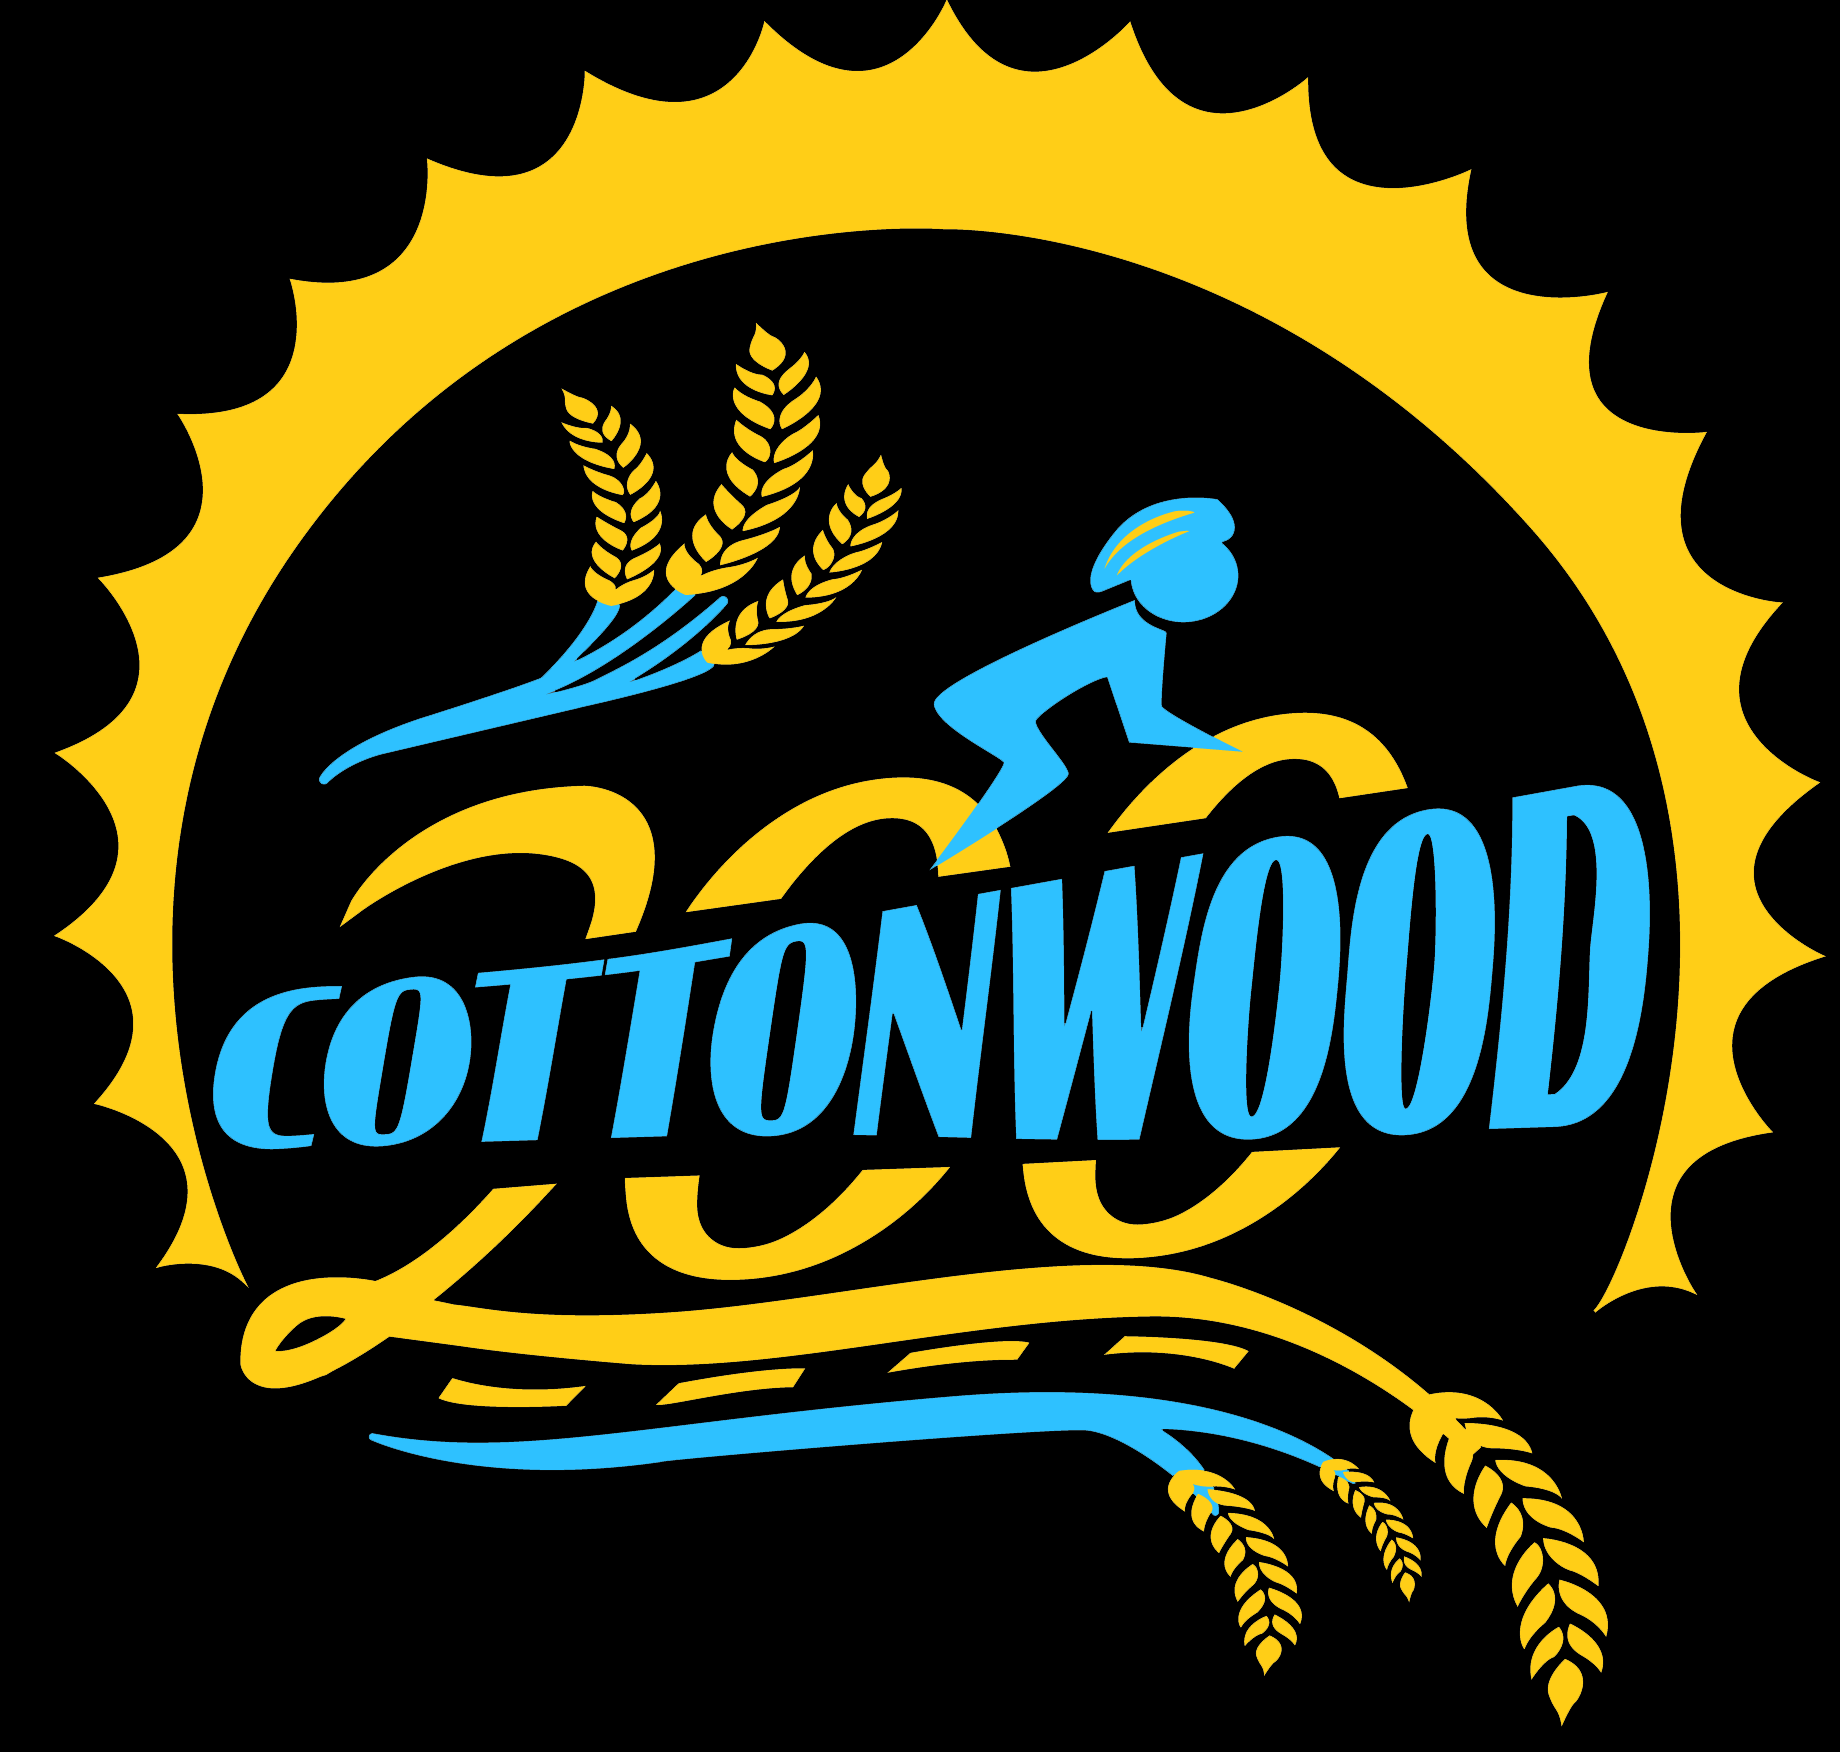 (c) Cottonwood200.org